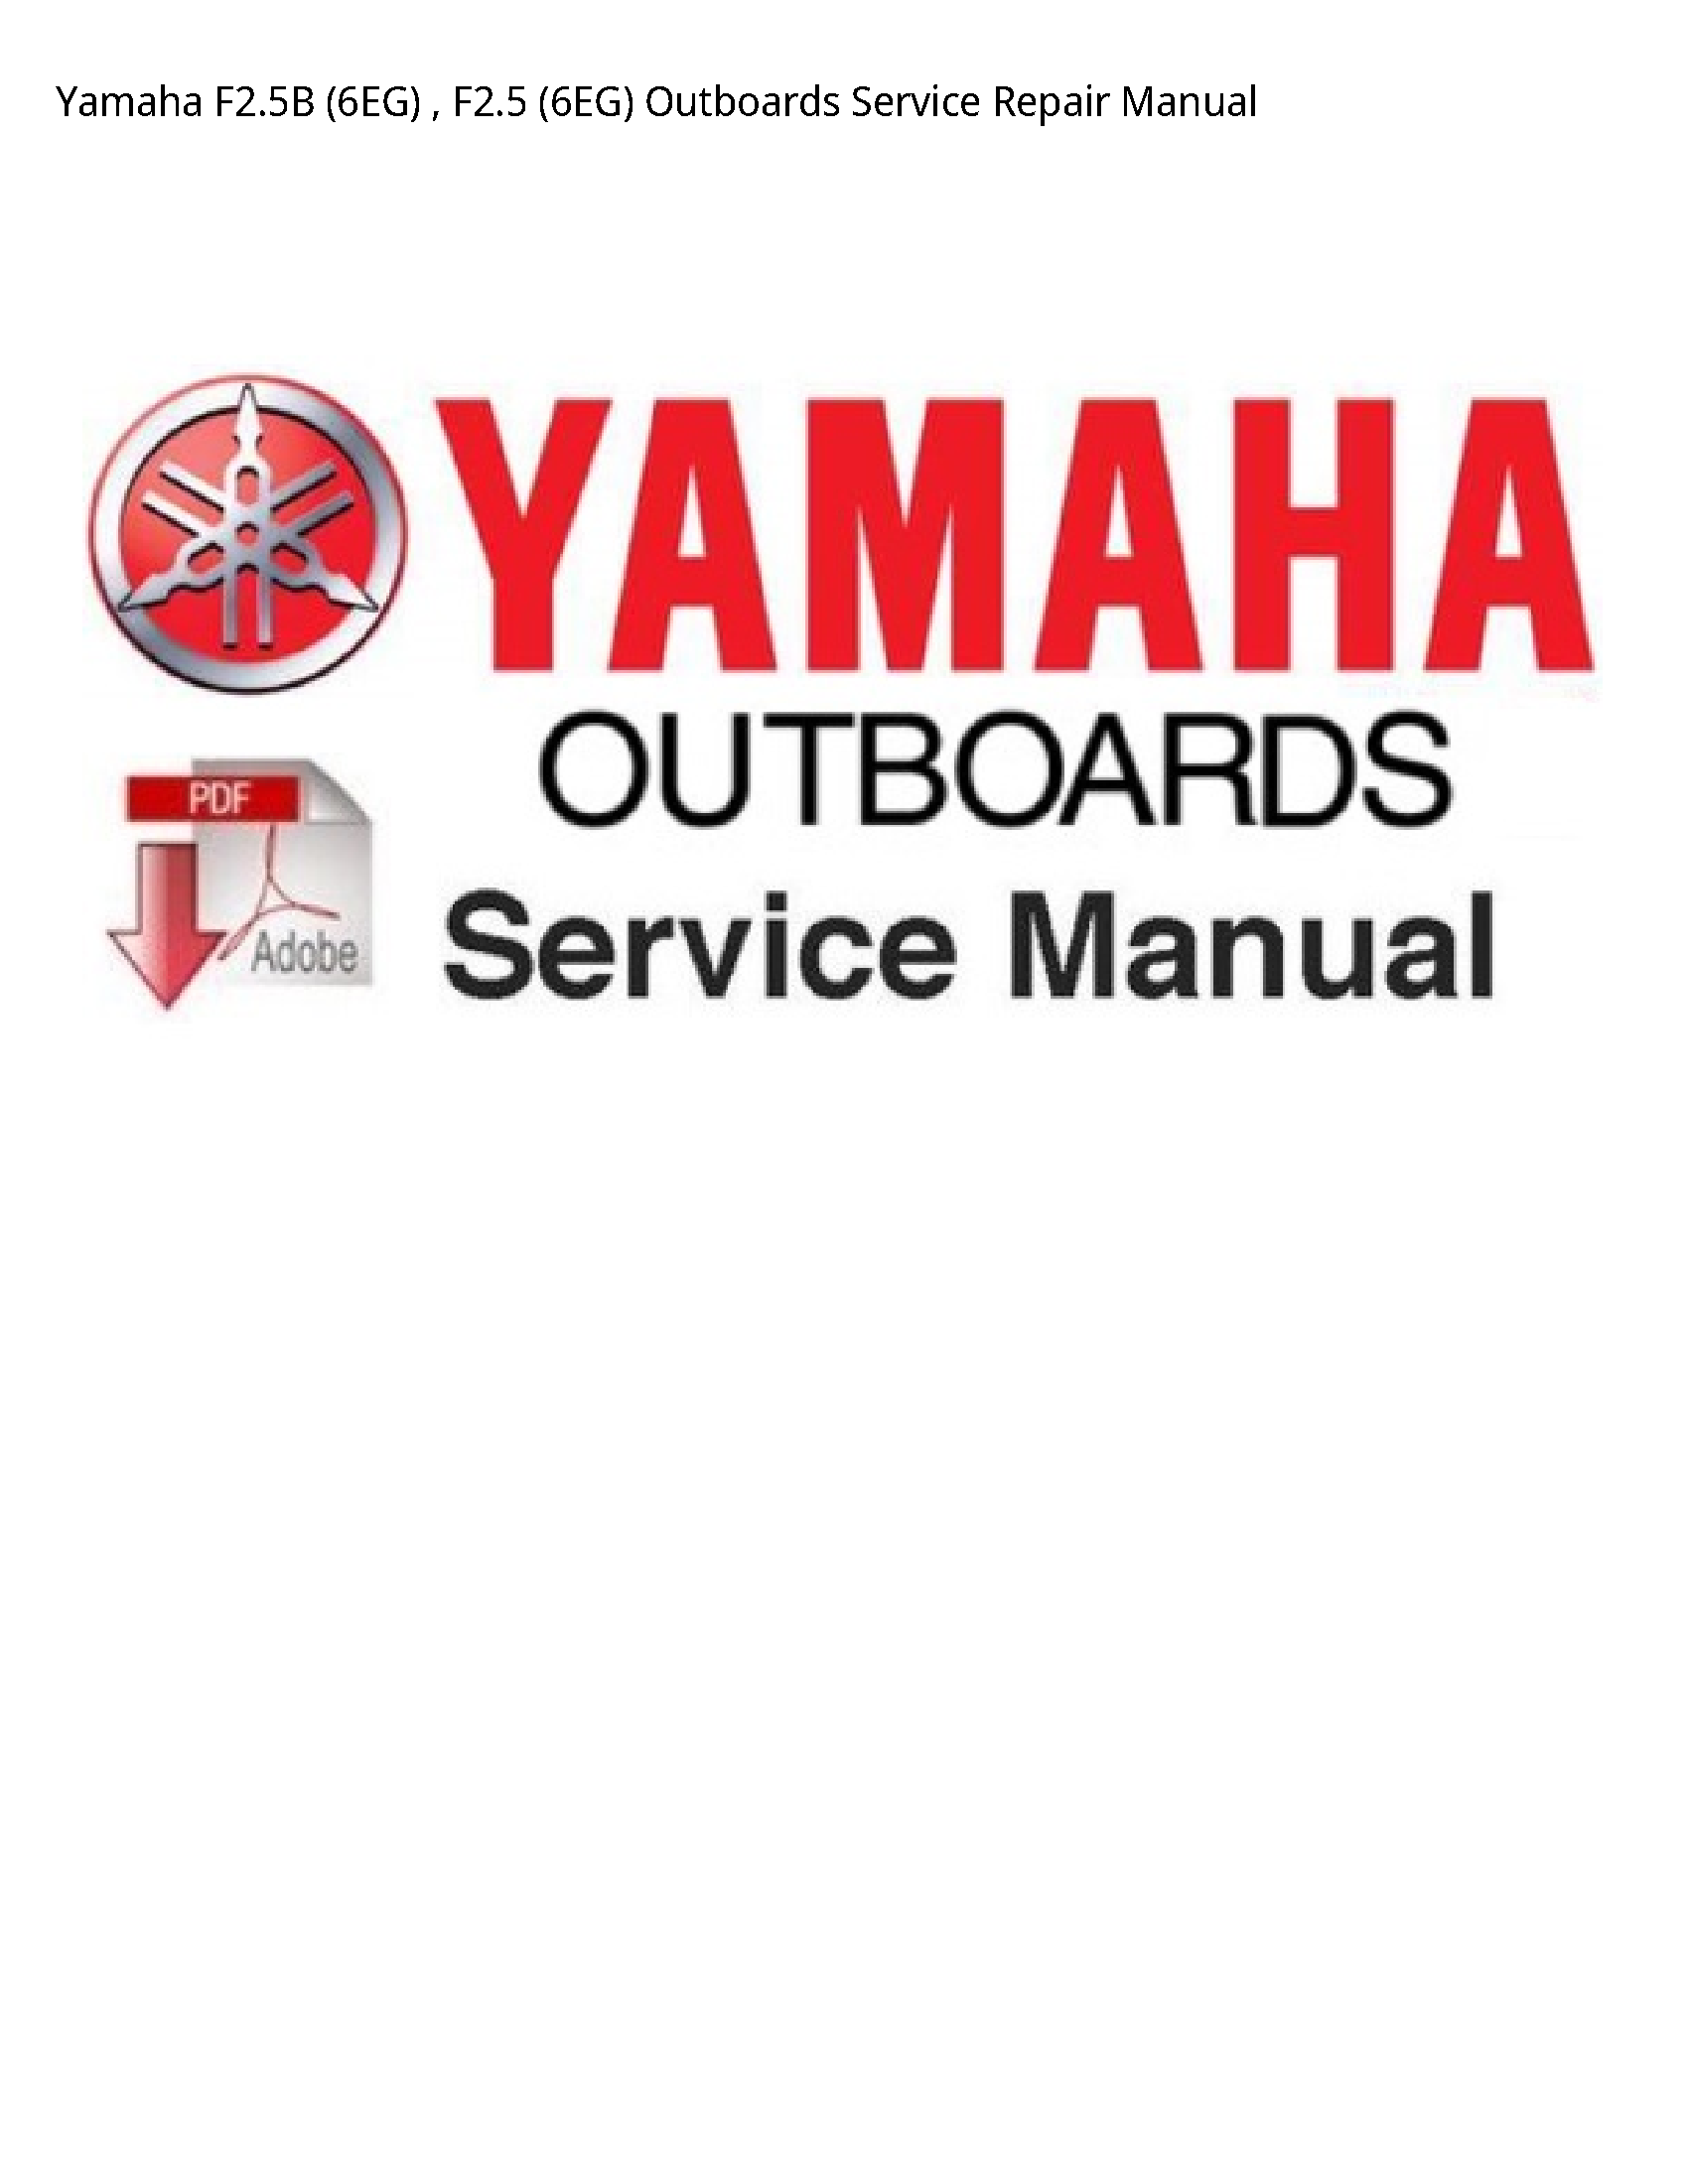 Yamaha F2.5B Outboards manual